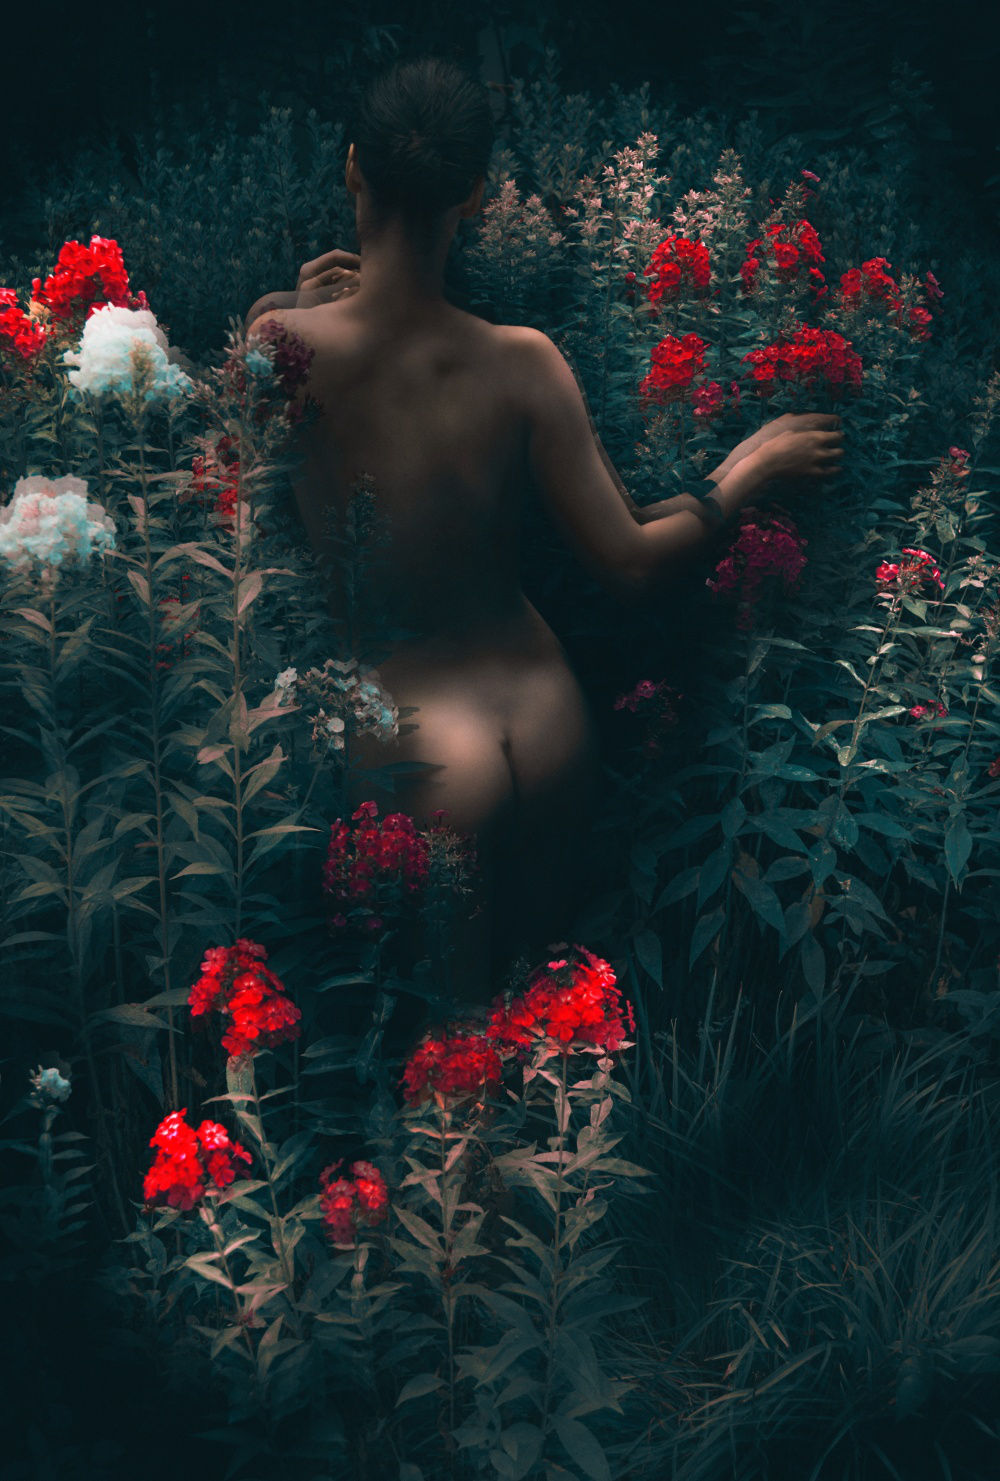 Erik Madigan Heck, Magenta Dawn, The Garden, 2018